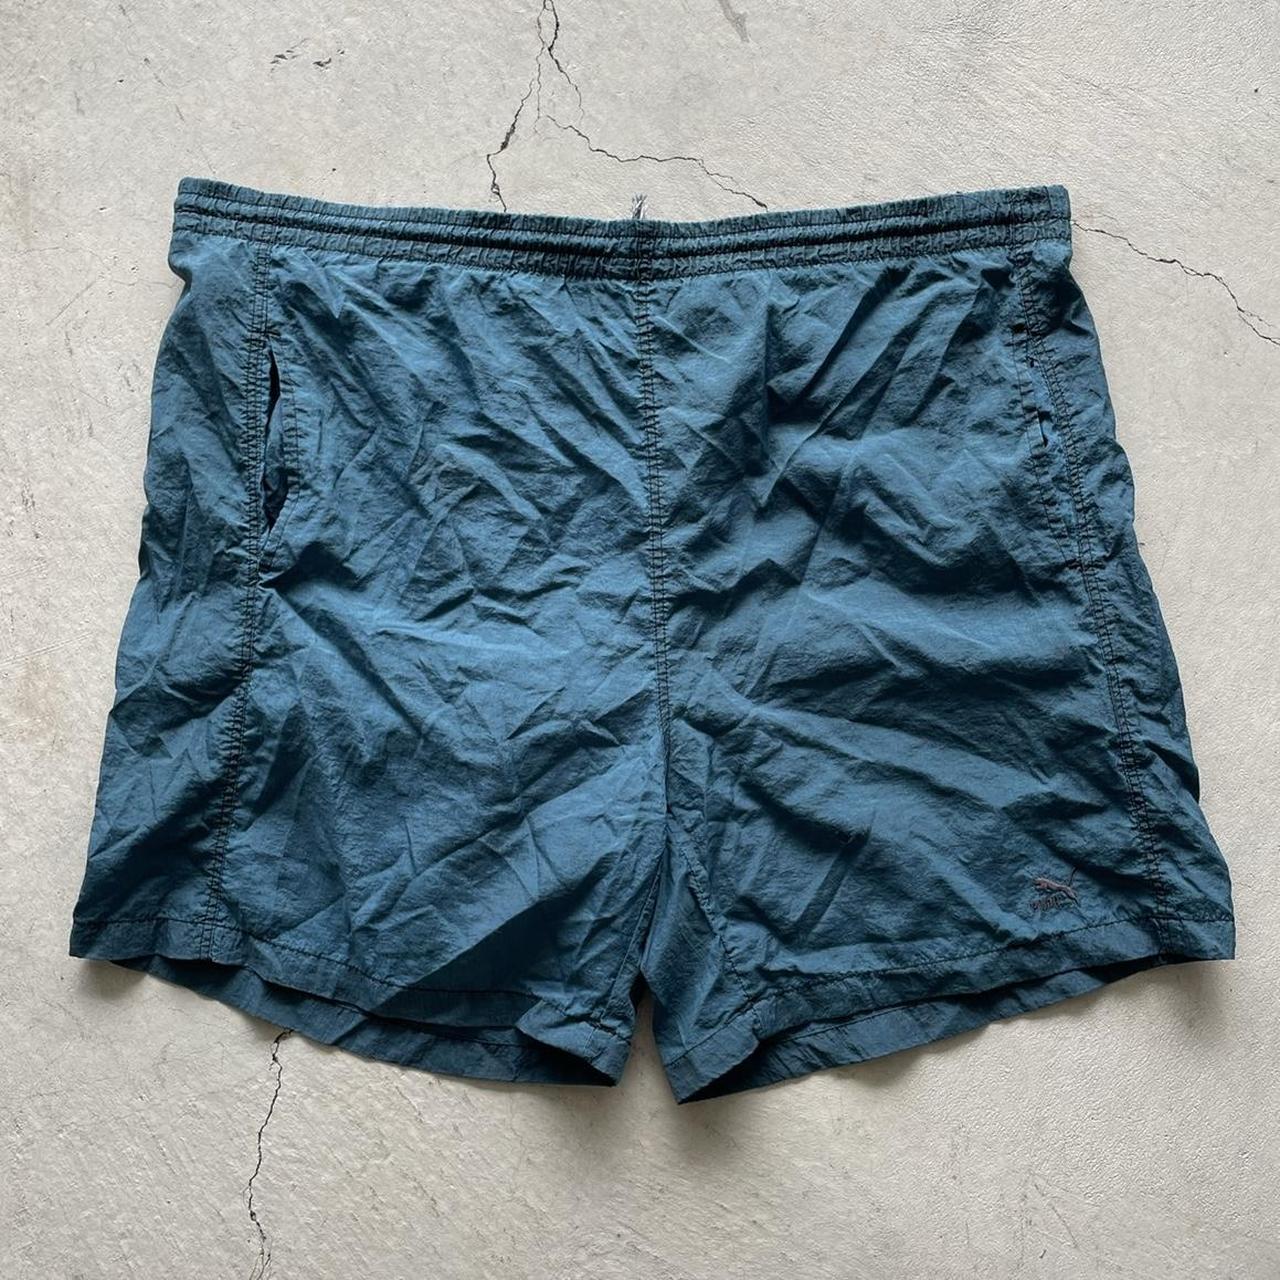 Super clean vintage 1990s Puma nylon shorts. Has a... - Depop